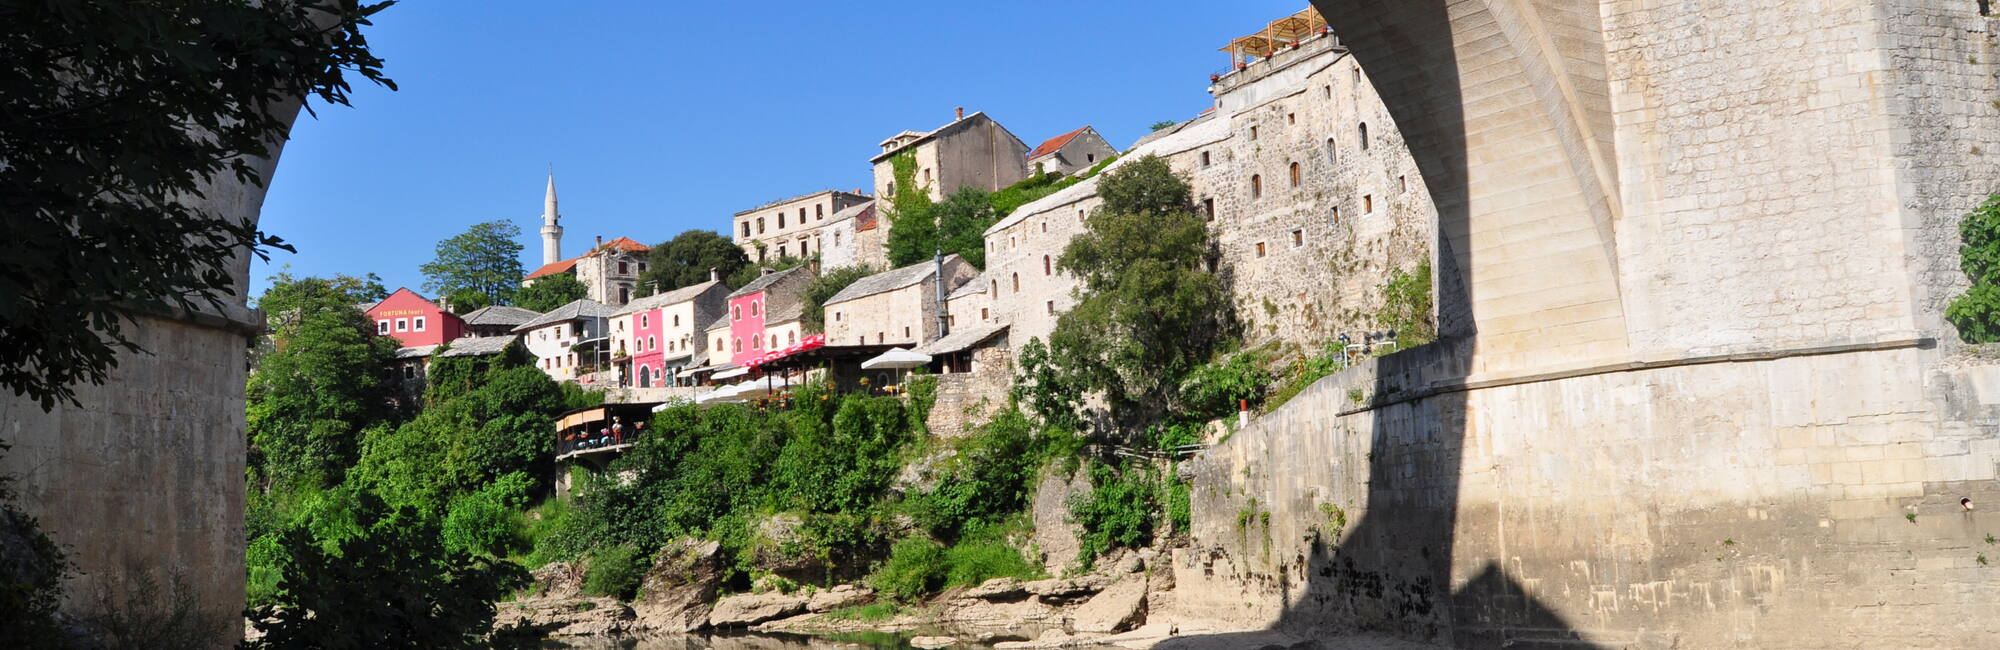 © Silvan Rehfeld / Old Bridge Area of the Old City of Mostar